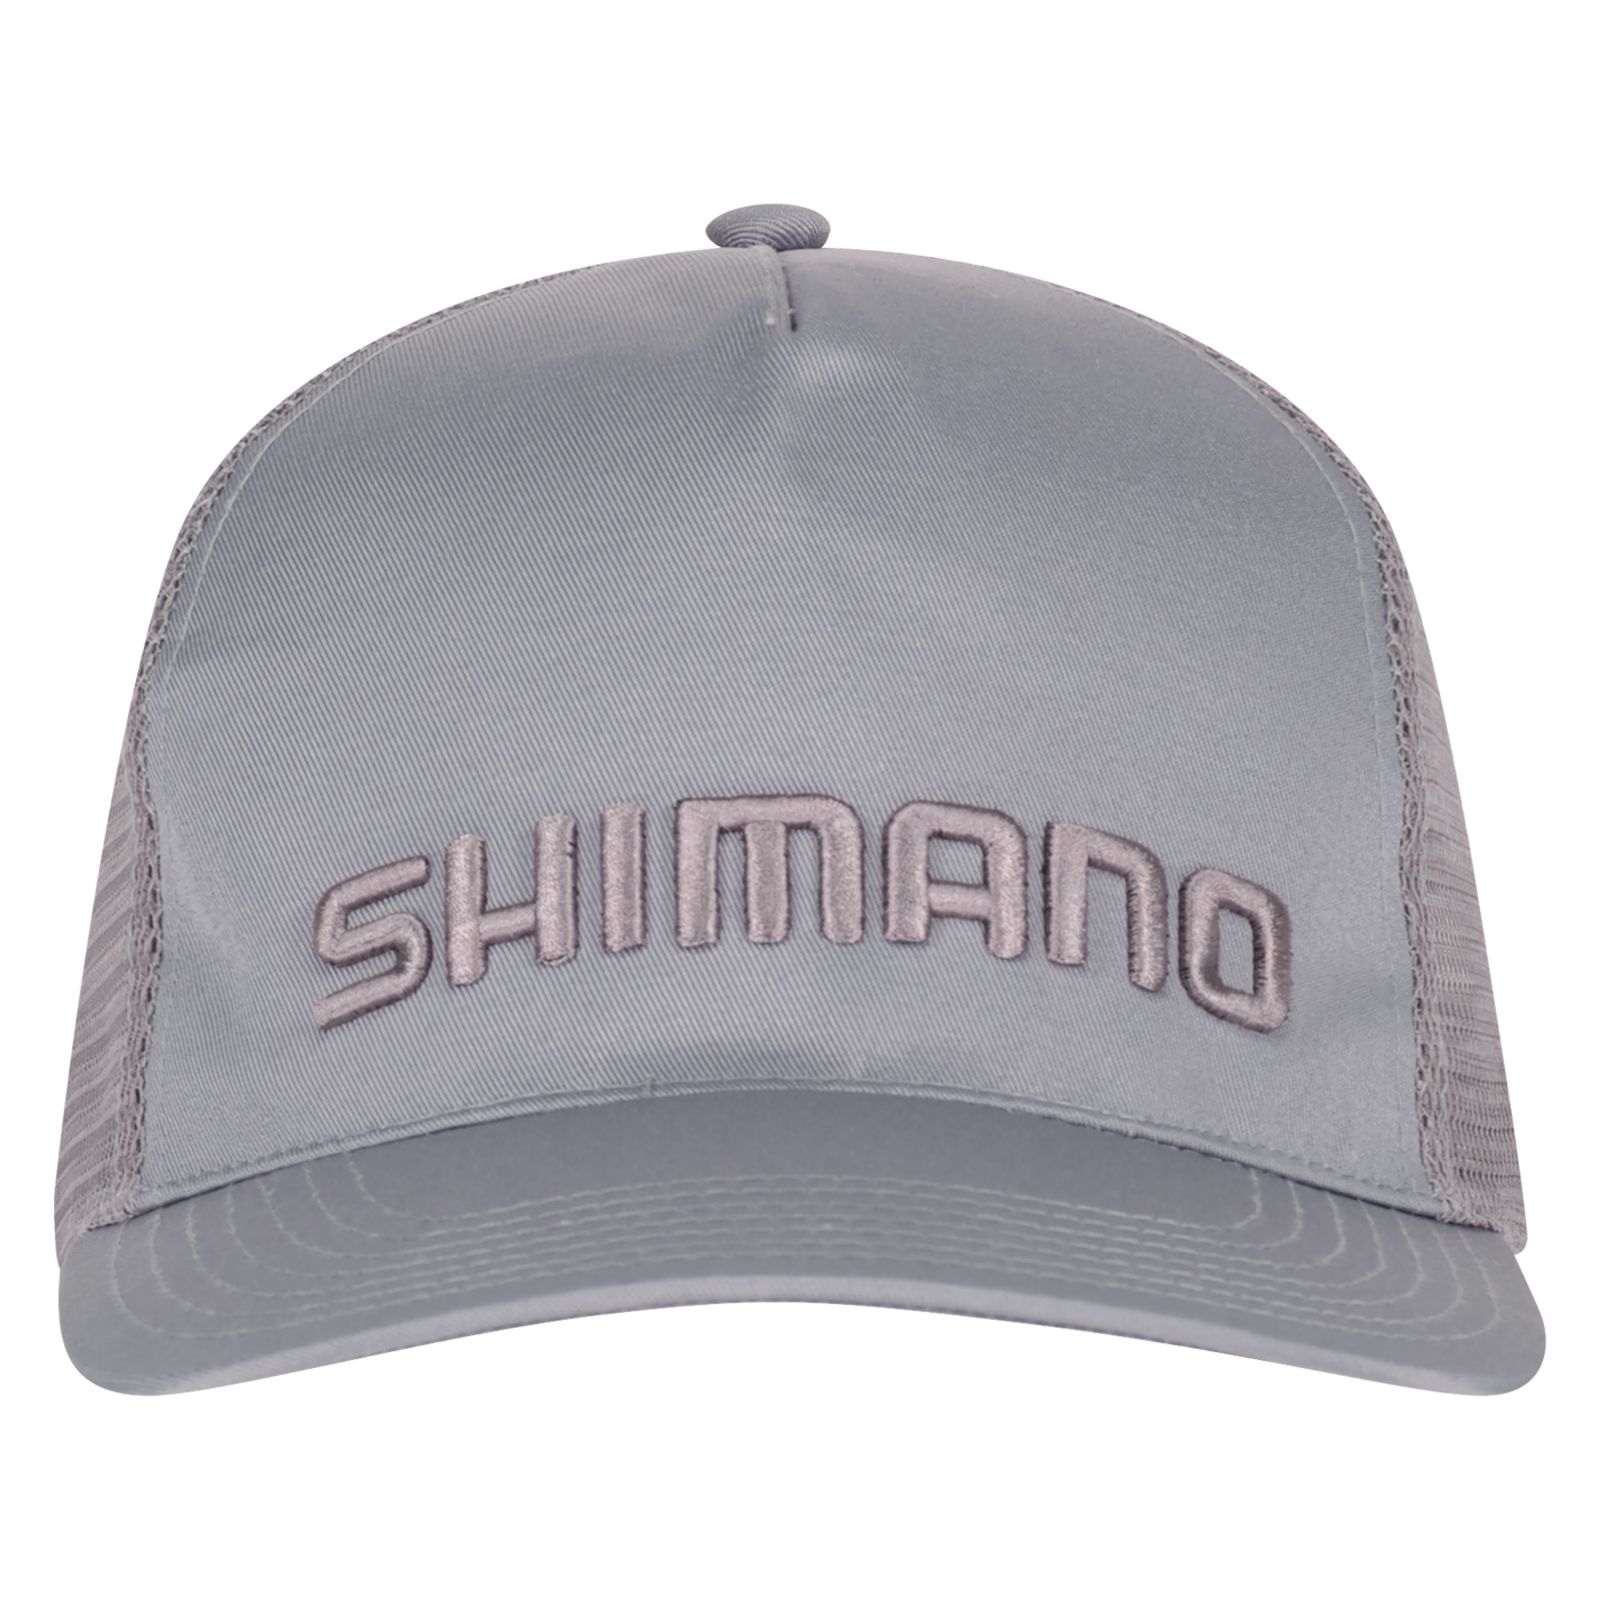 SHIMANO čepice TRUCKER CAP, šedá, one size